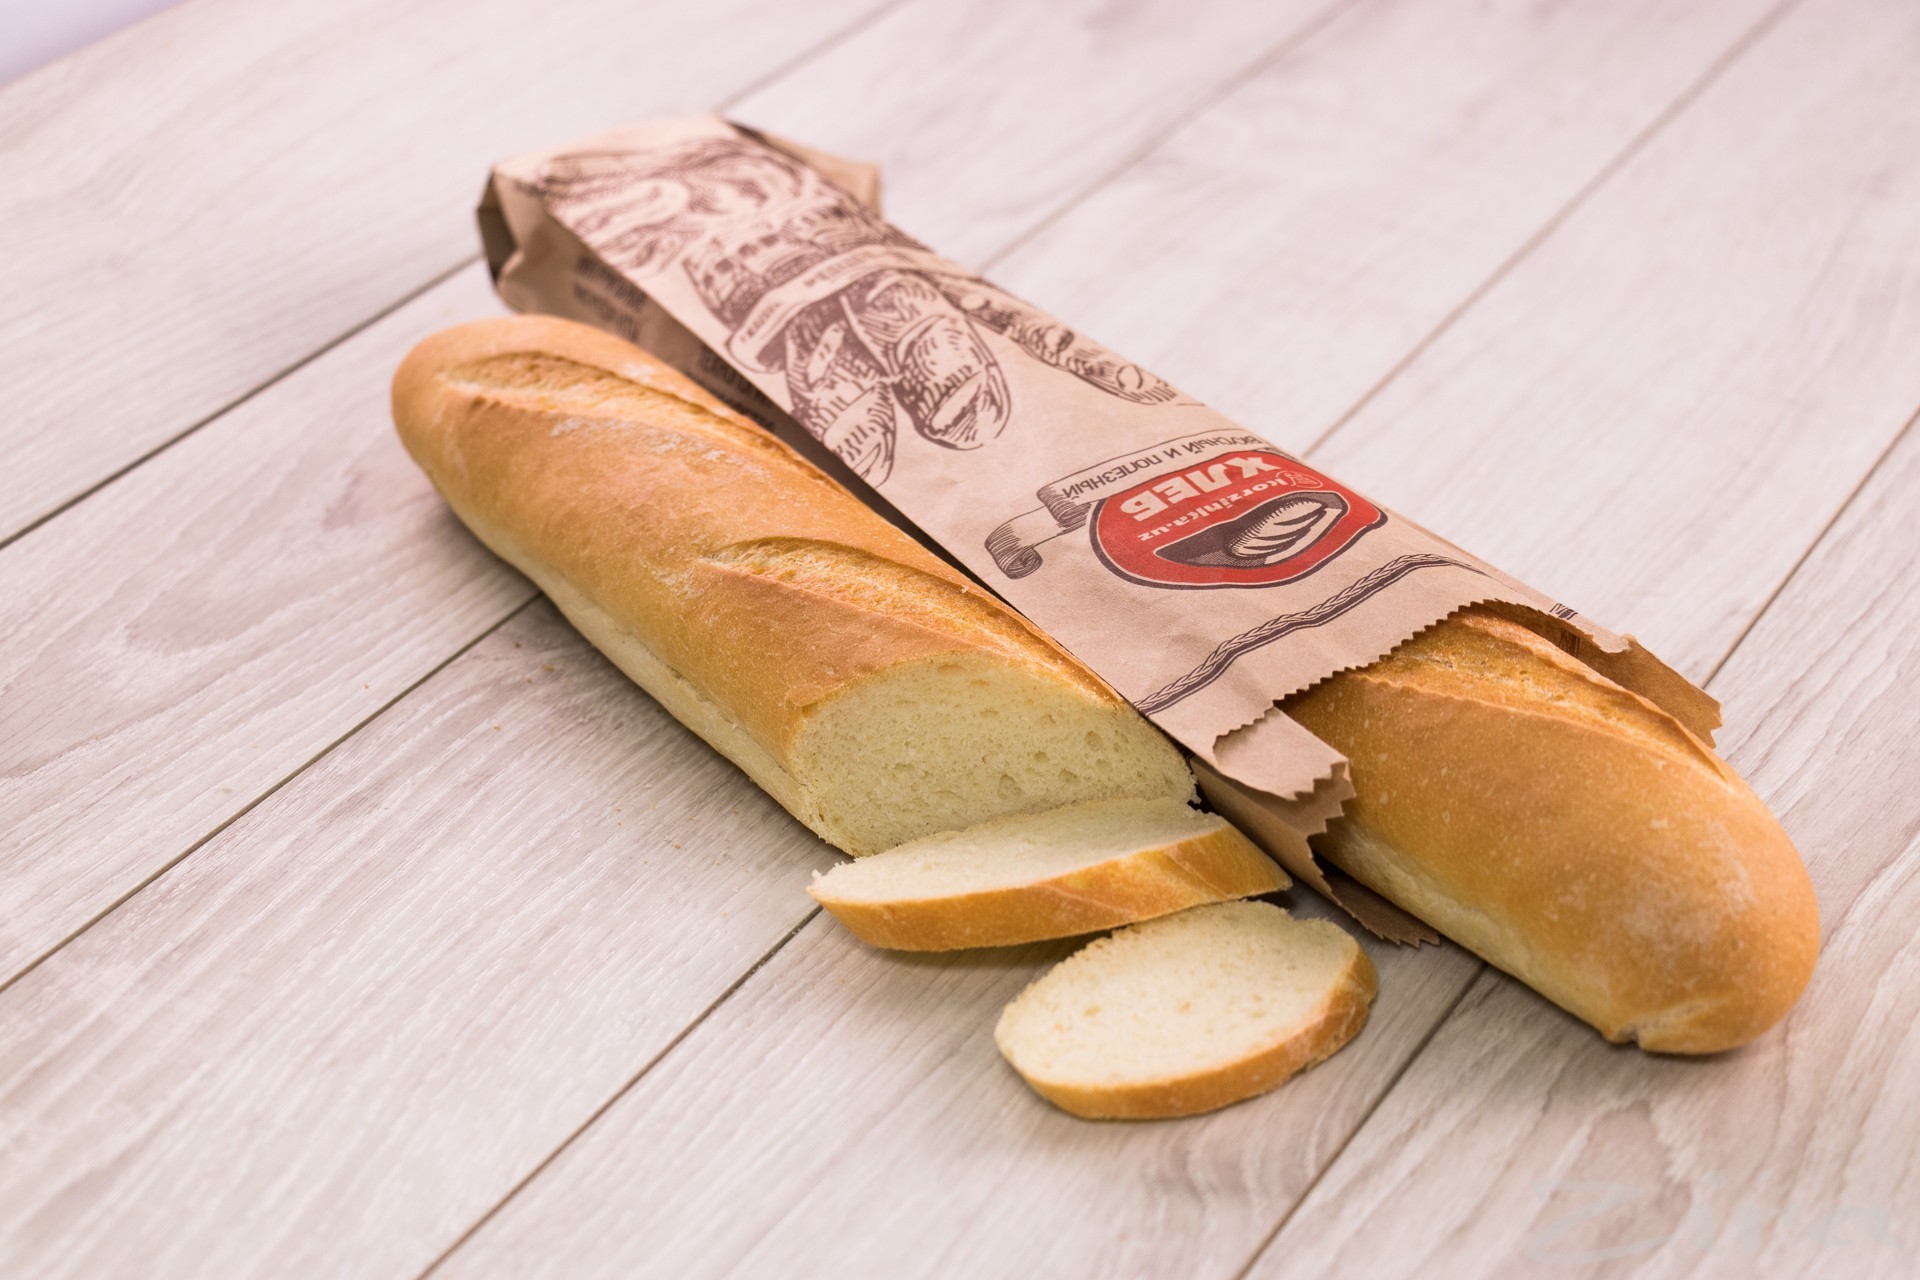 Пенал хлеб